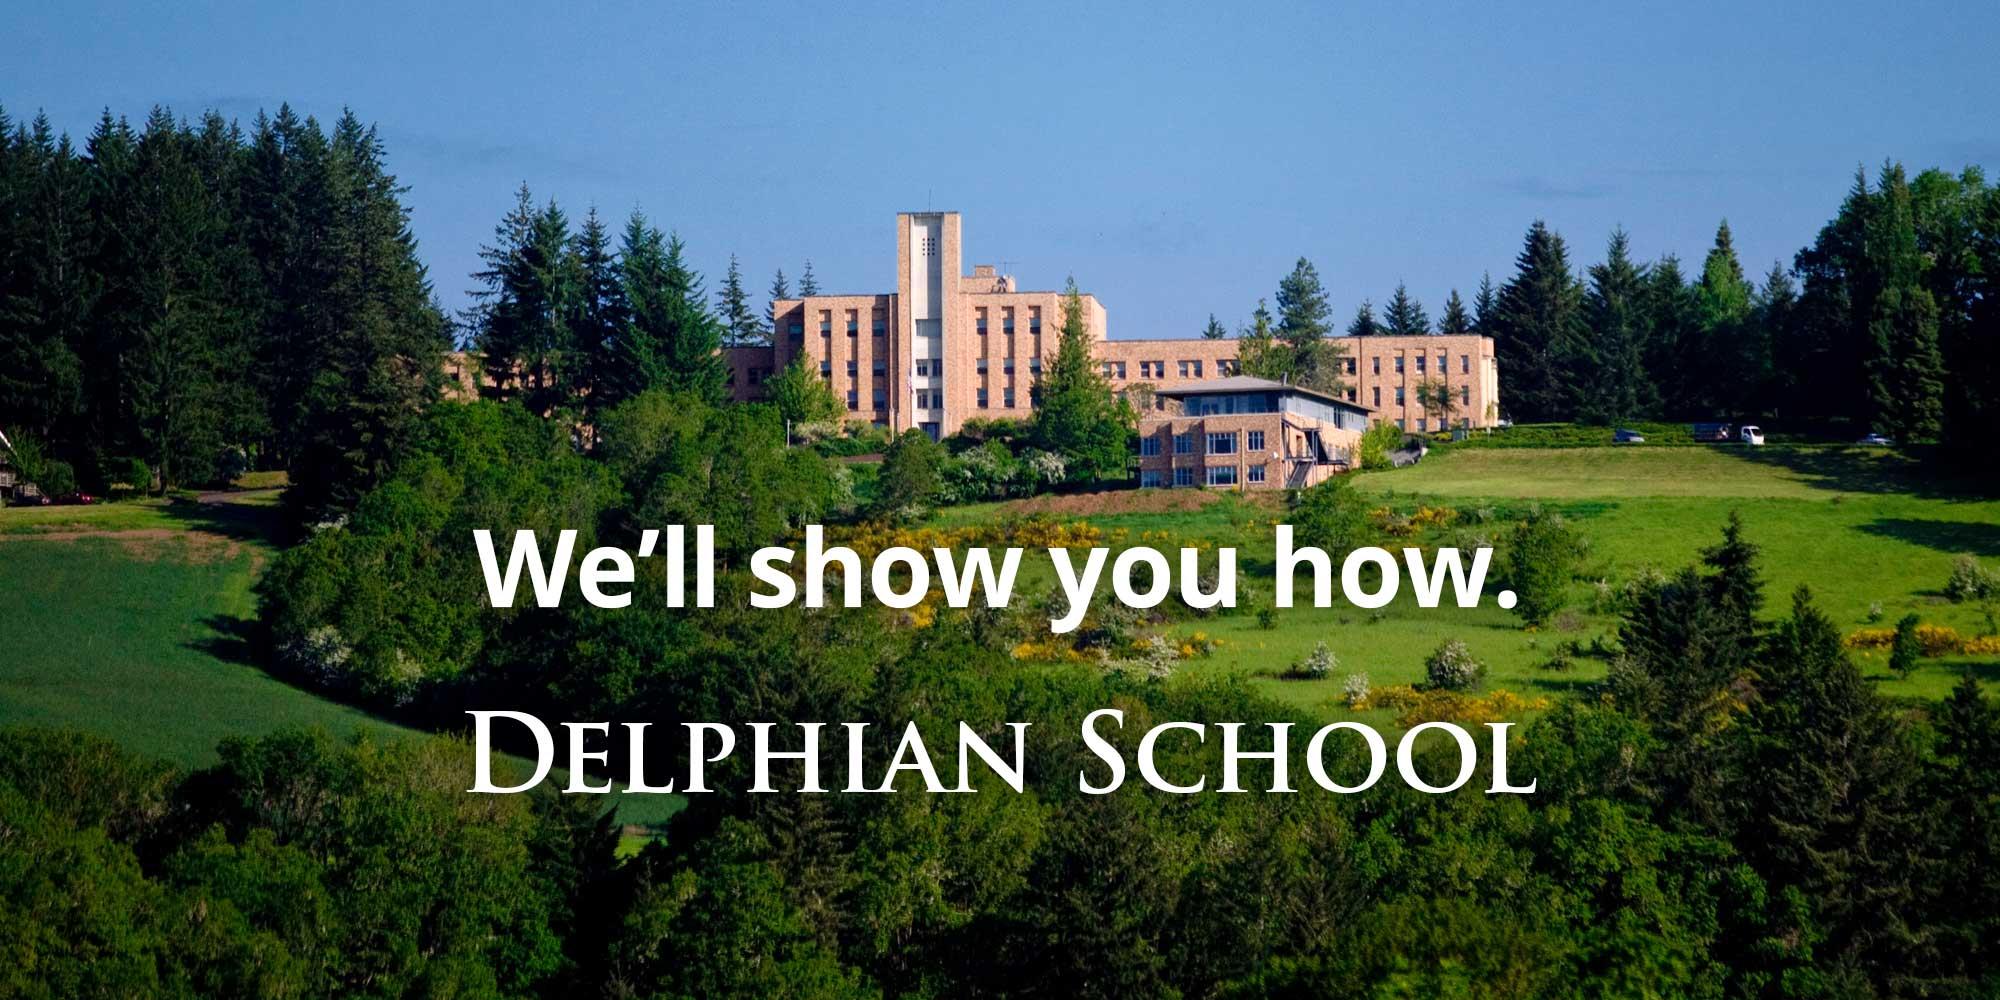 OR-Delphian School特尔菲学校201808-0001.jpg